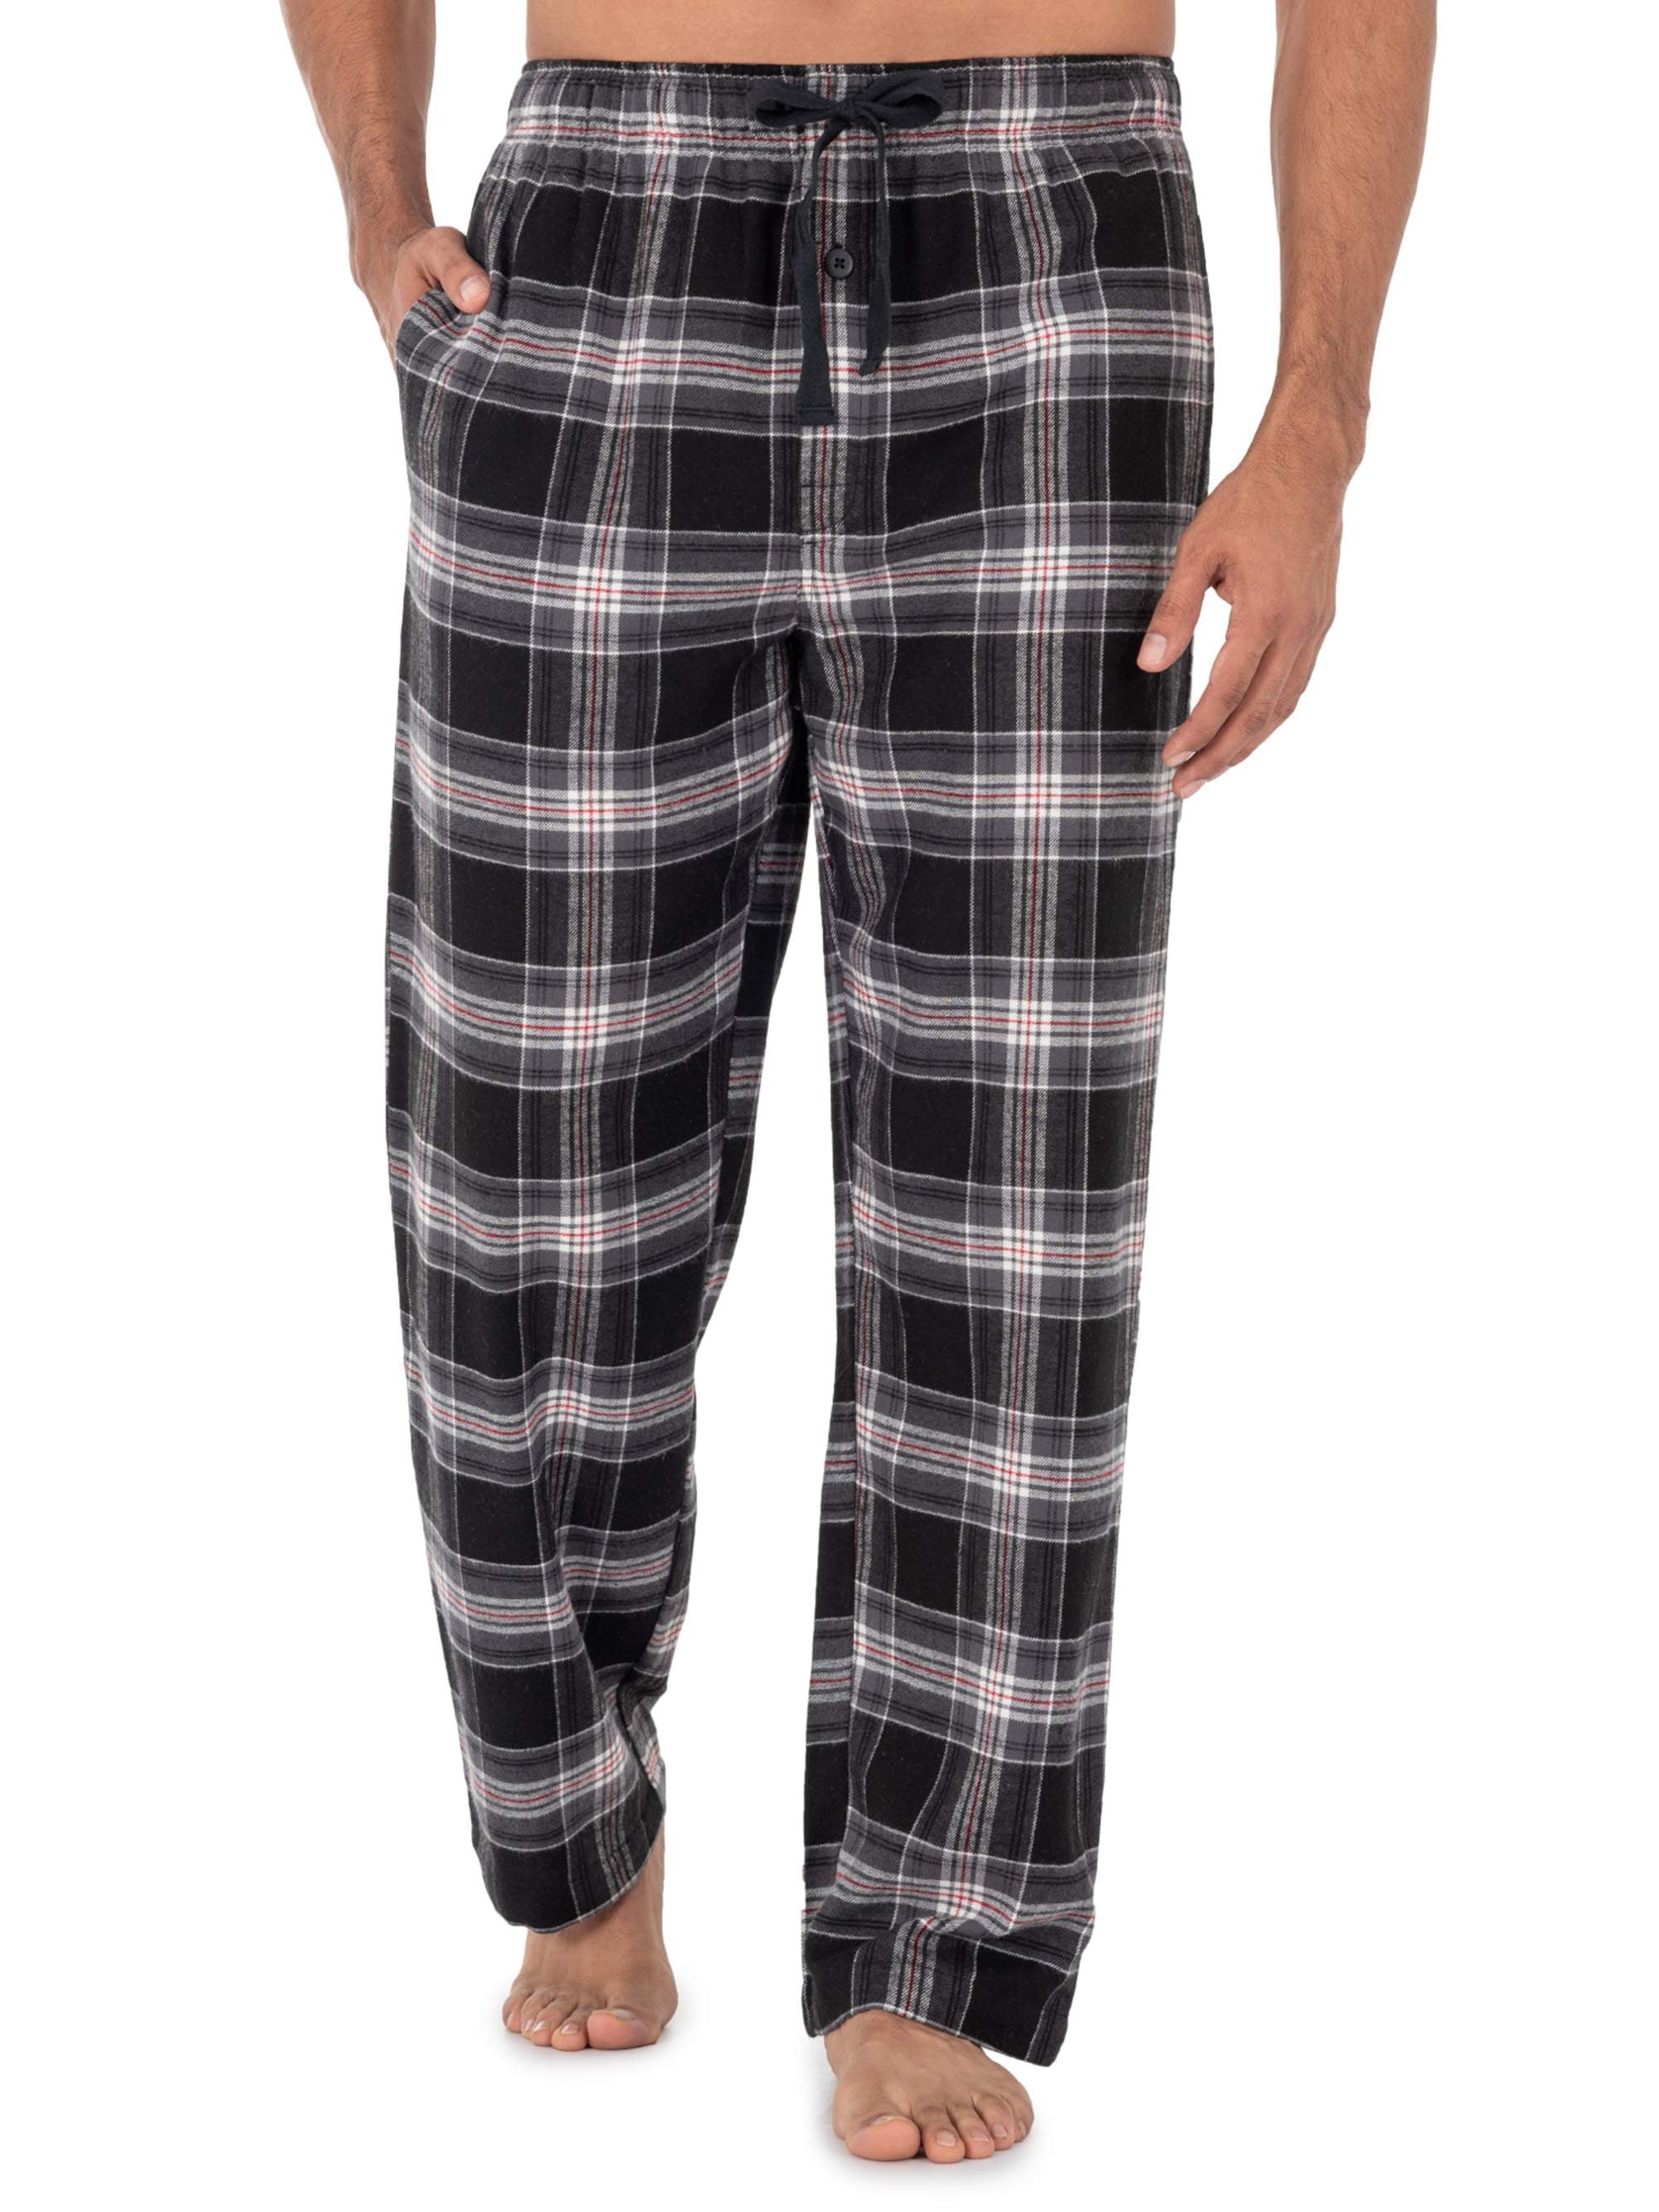 George Men's Plaid Woven Flannel Sleep Pants - Walmart.com